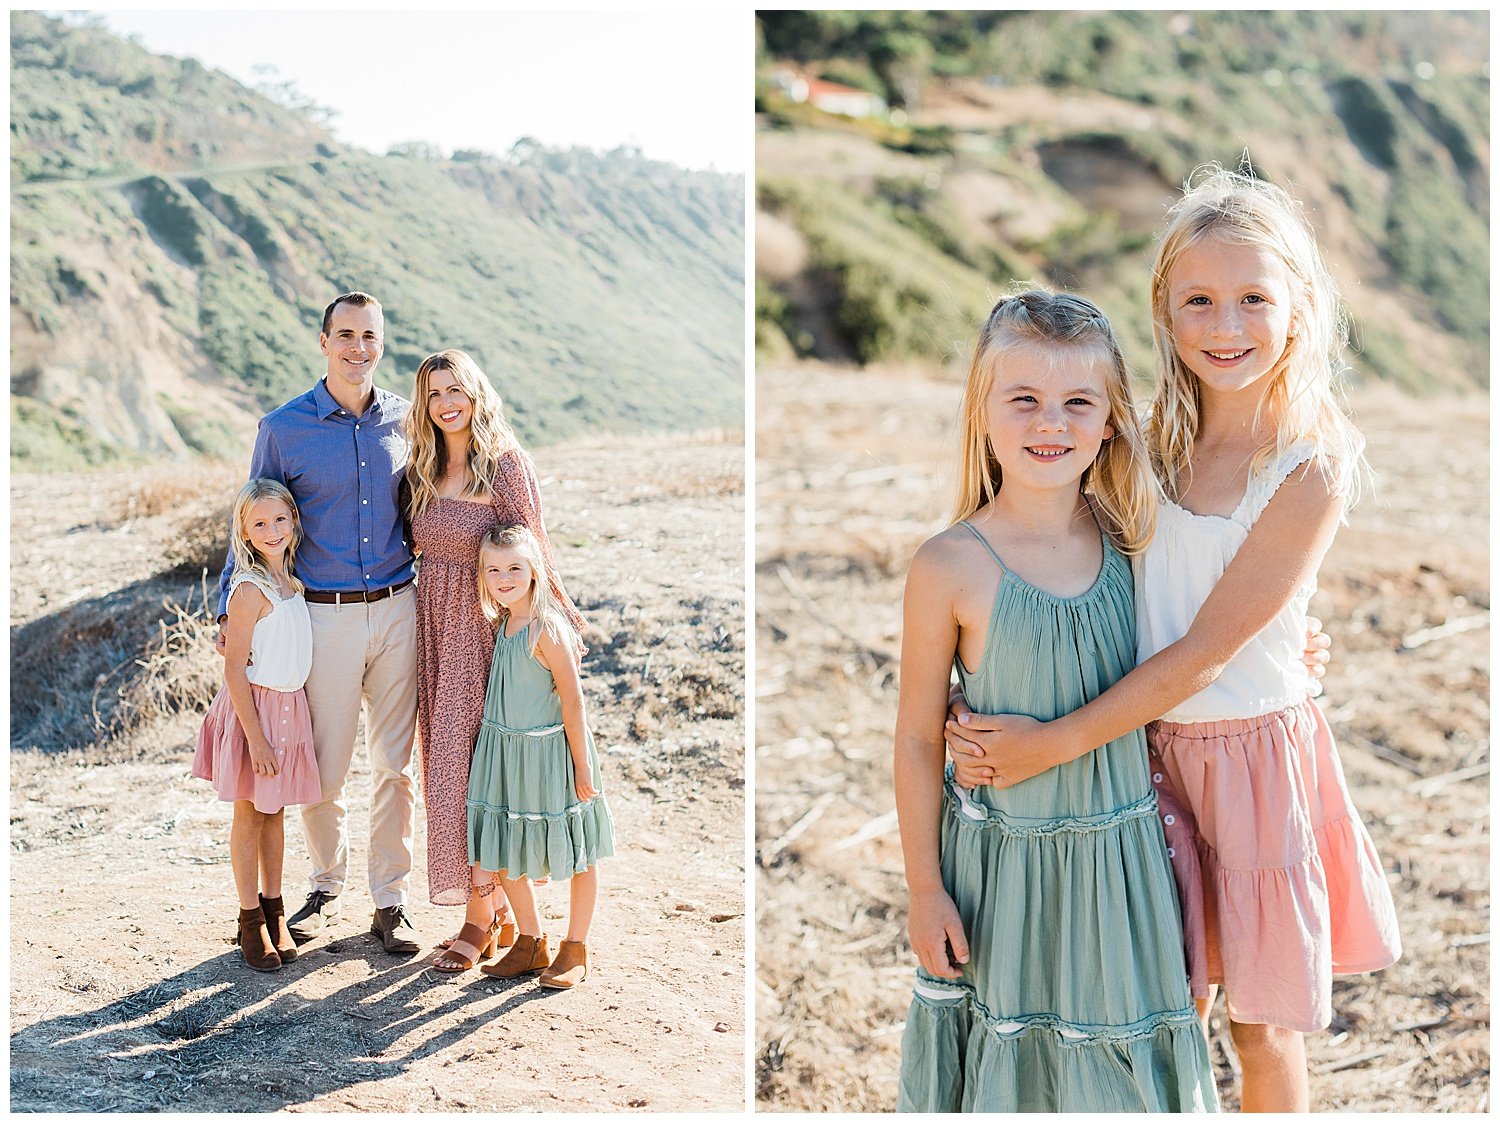 Los Angeles family photography at Palos Verdes Bluffs. Hermosa Beach family photographer, Jennifer Faulk